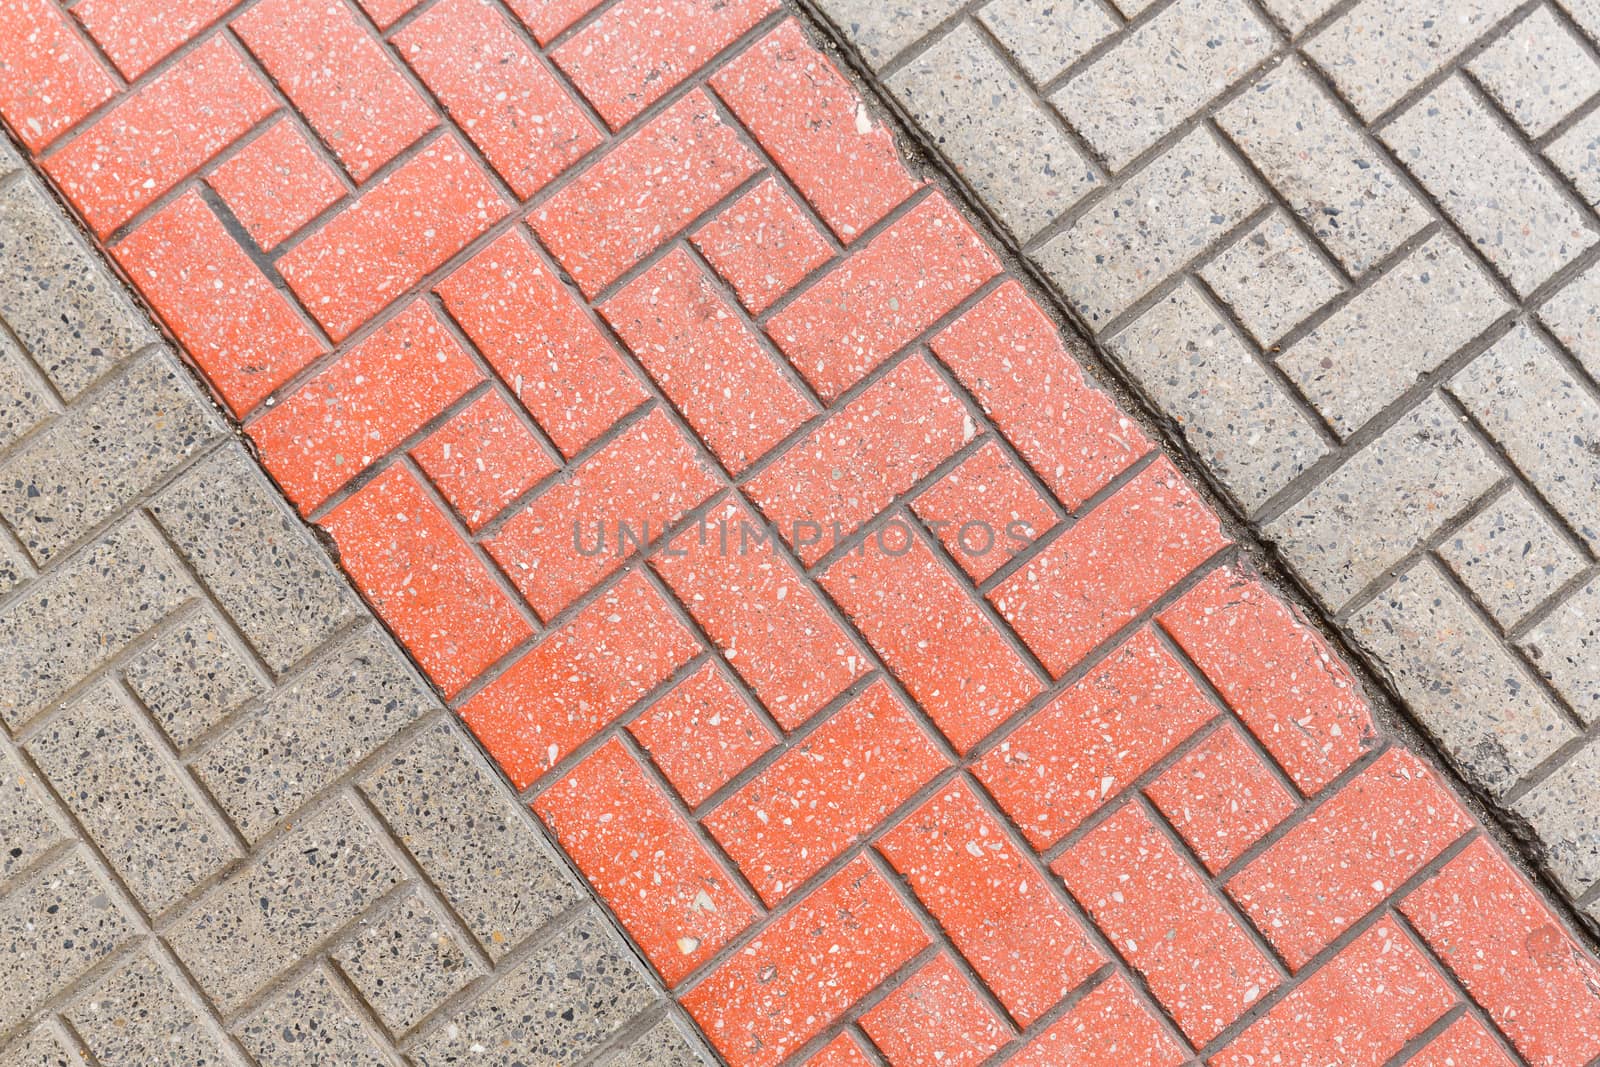 floor tiles footpath walkway concrete granite pavement pattern path sidewalk stone surface background street brick block rough architecture